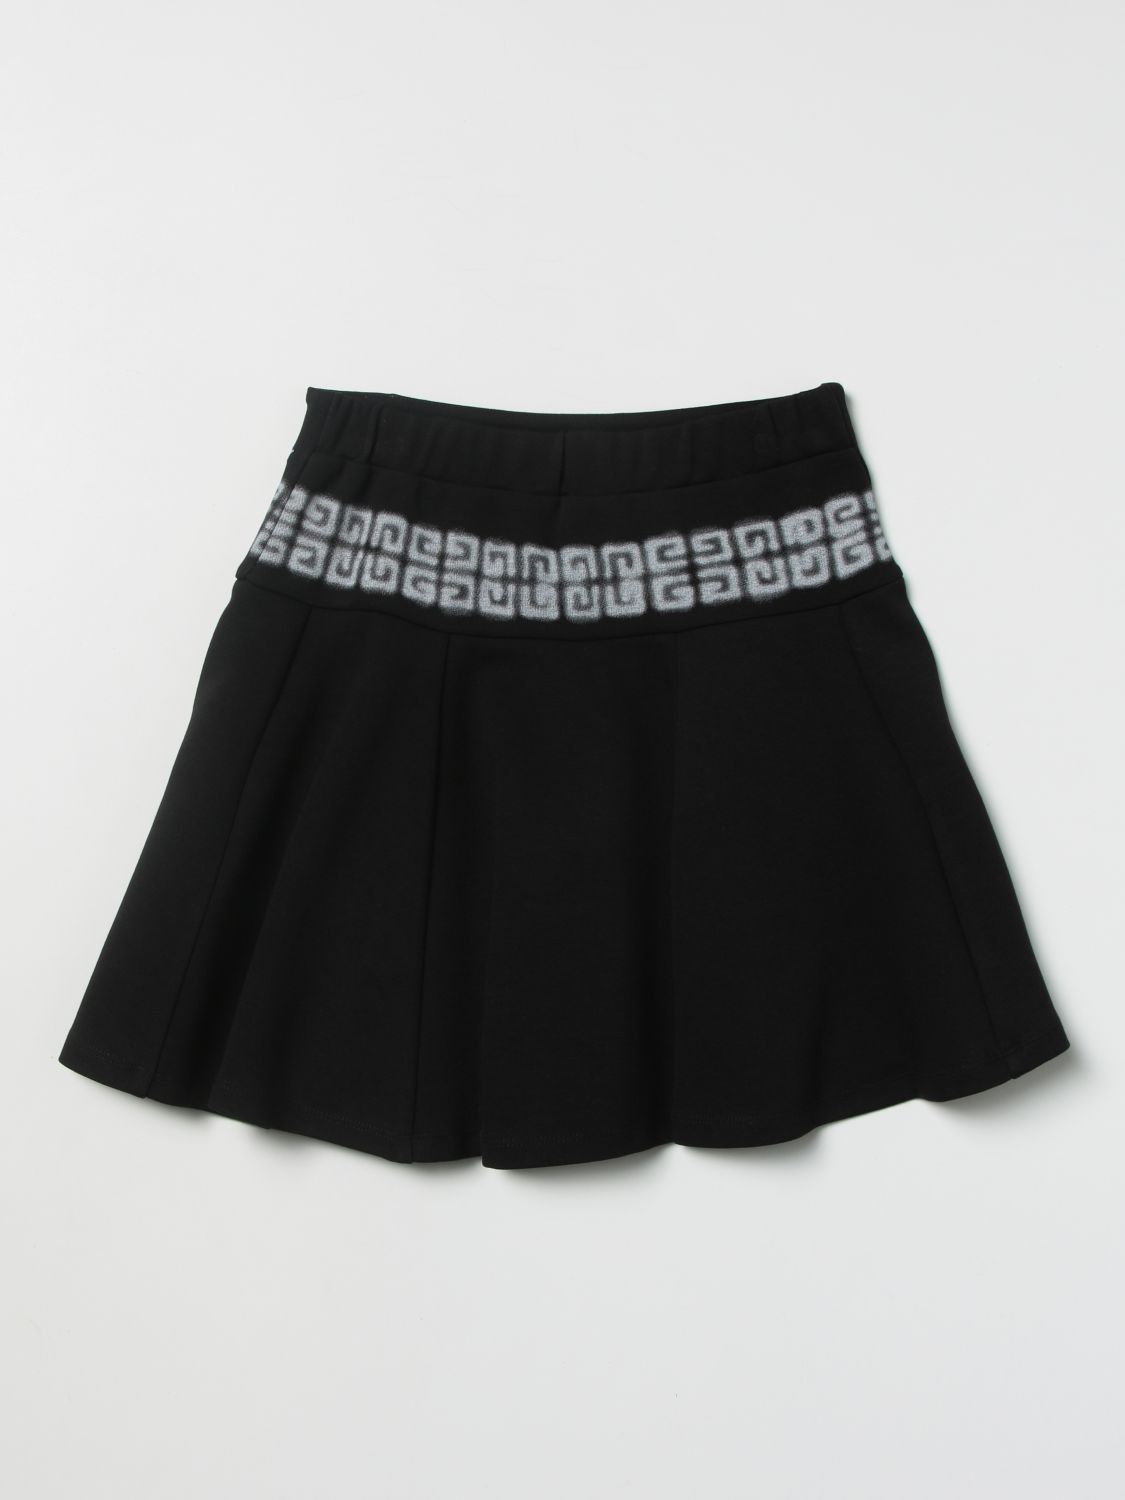 Skirt Givenchy: Givenchy skirt for girl black 2